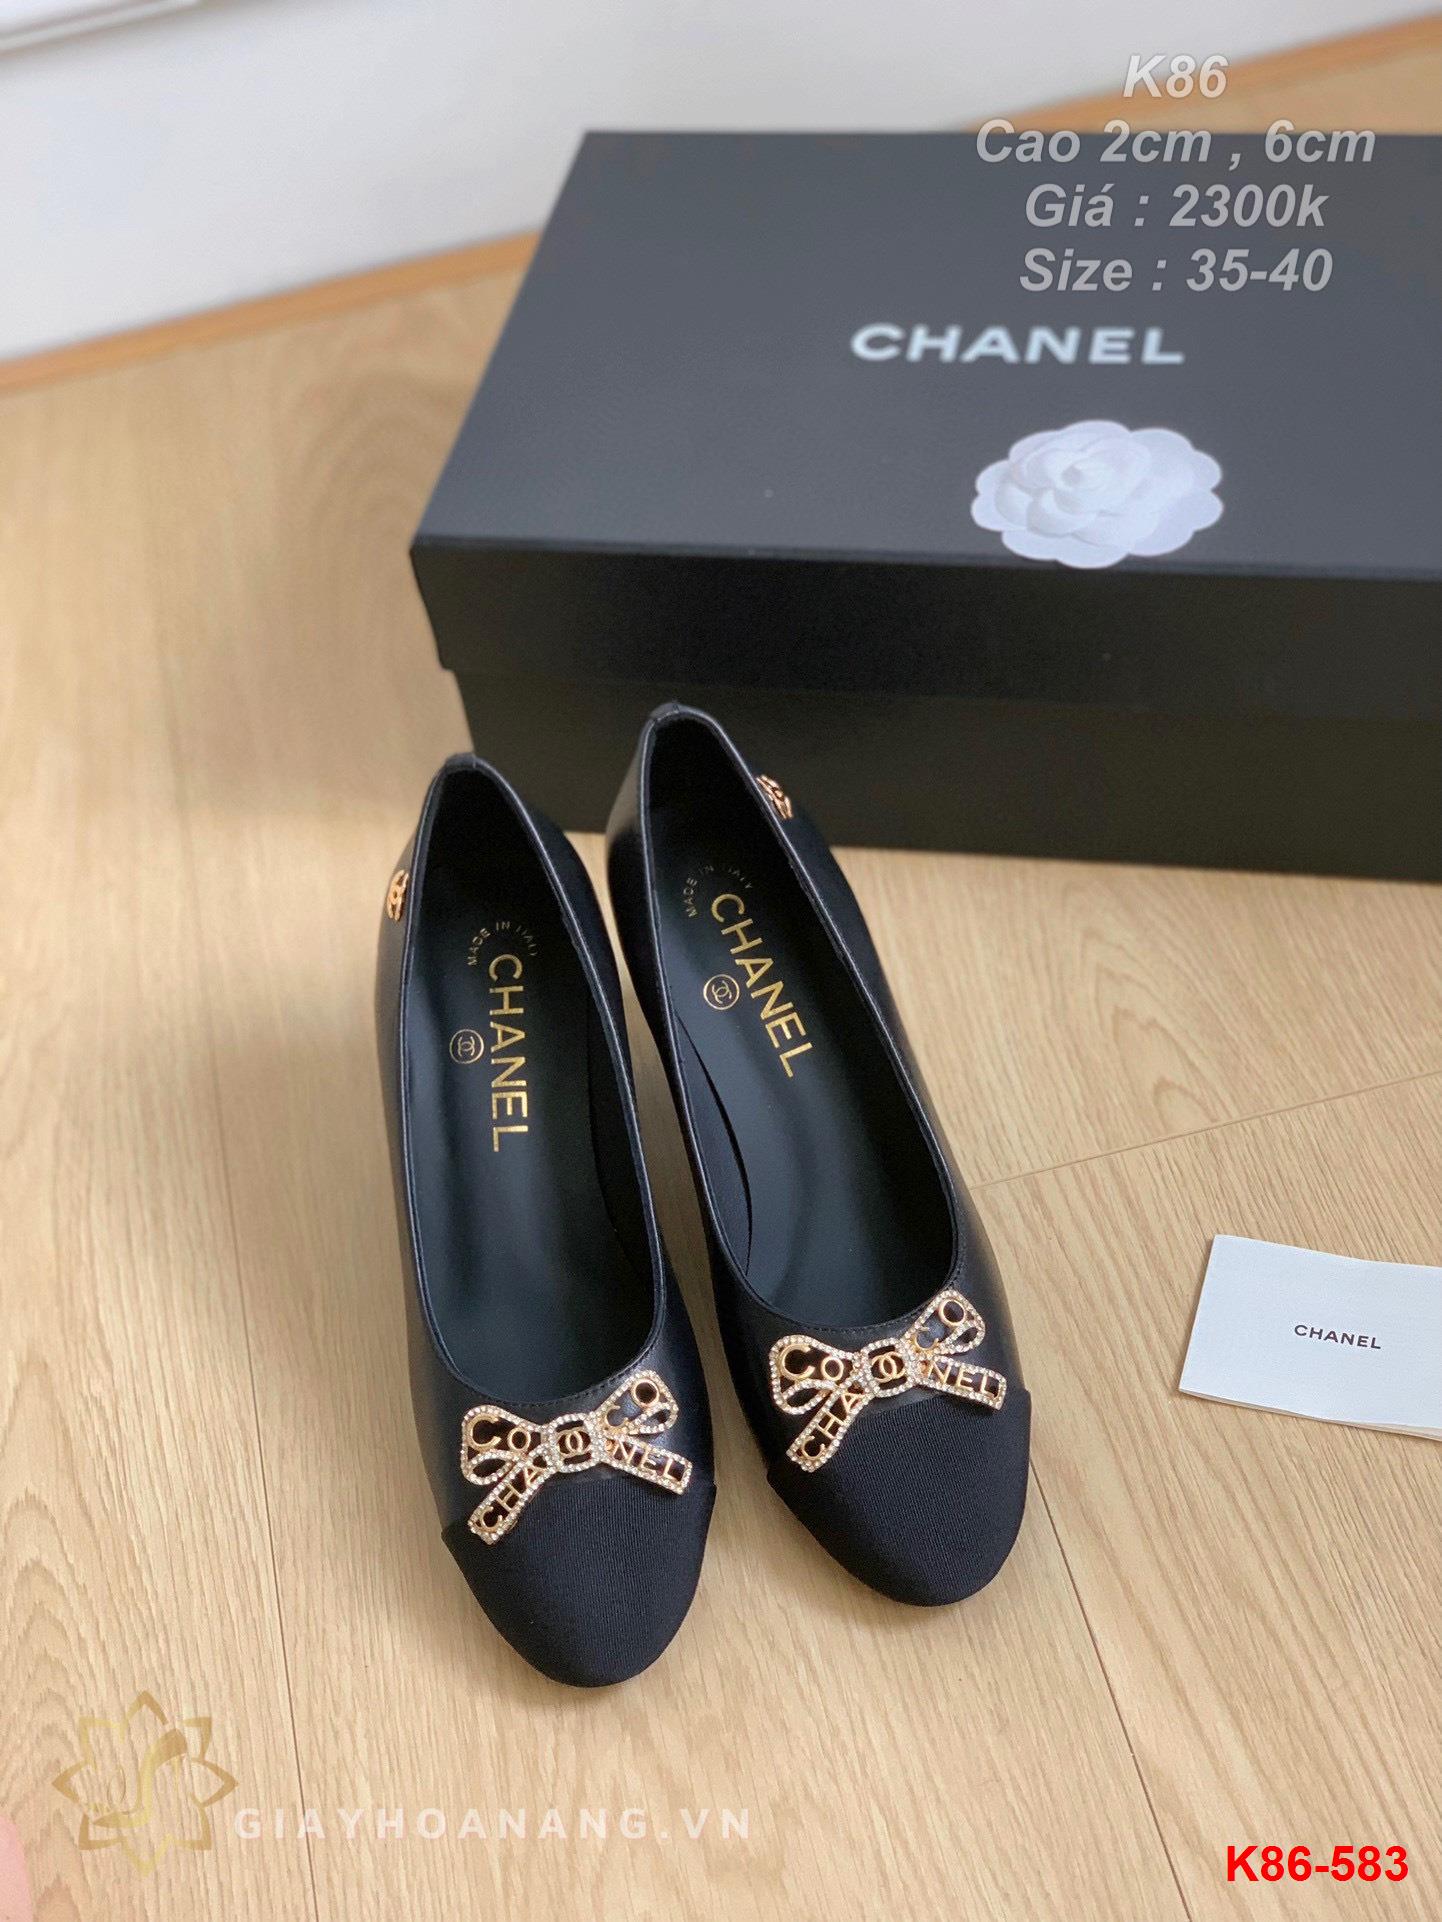 K86-583 Chanel giày cao 2cm , 6cm siêu cấp